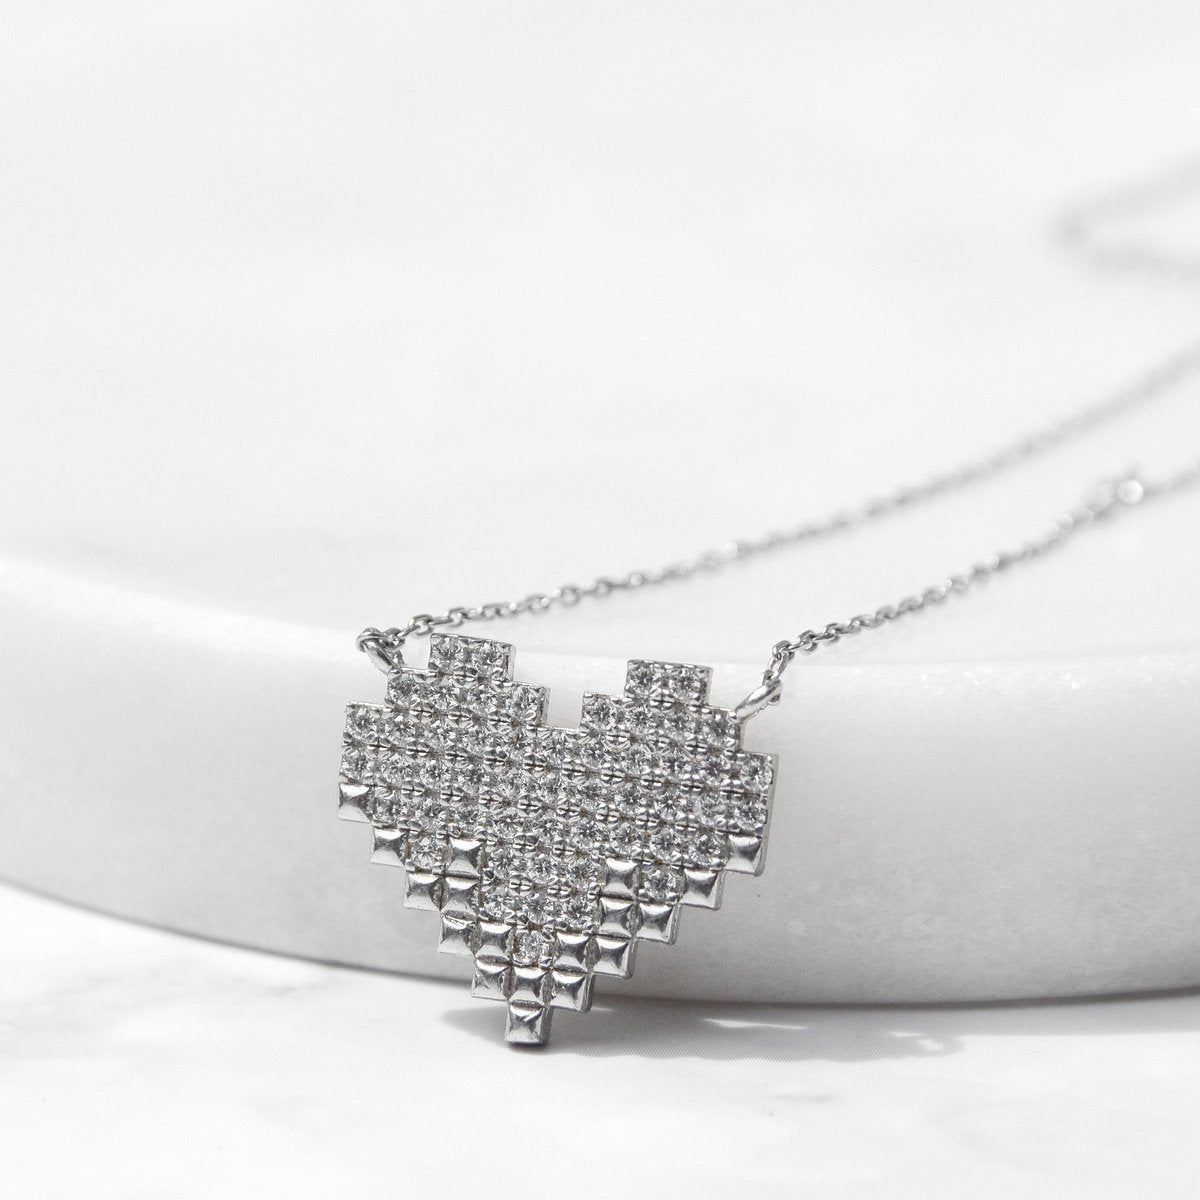 Favorite Notification - Pixelated Heart Pendant Necklace Gift Set